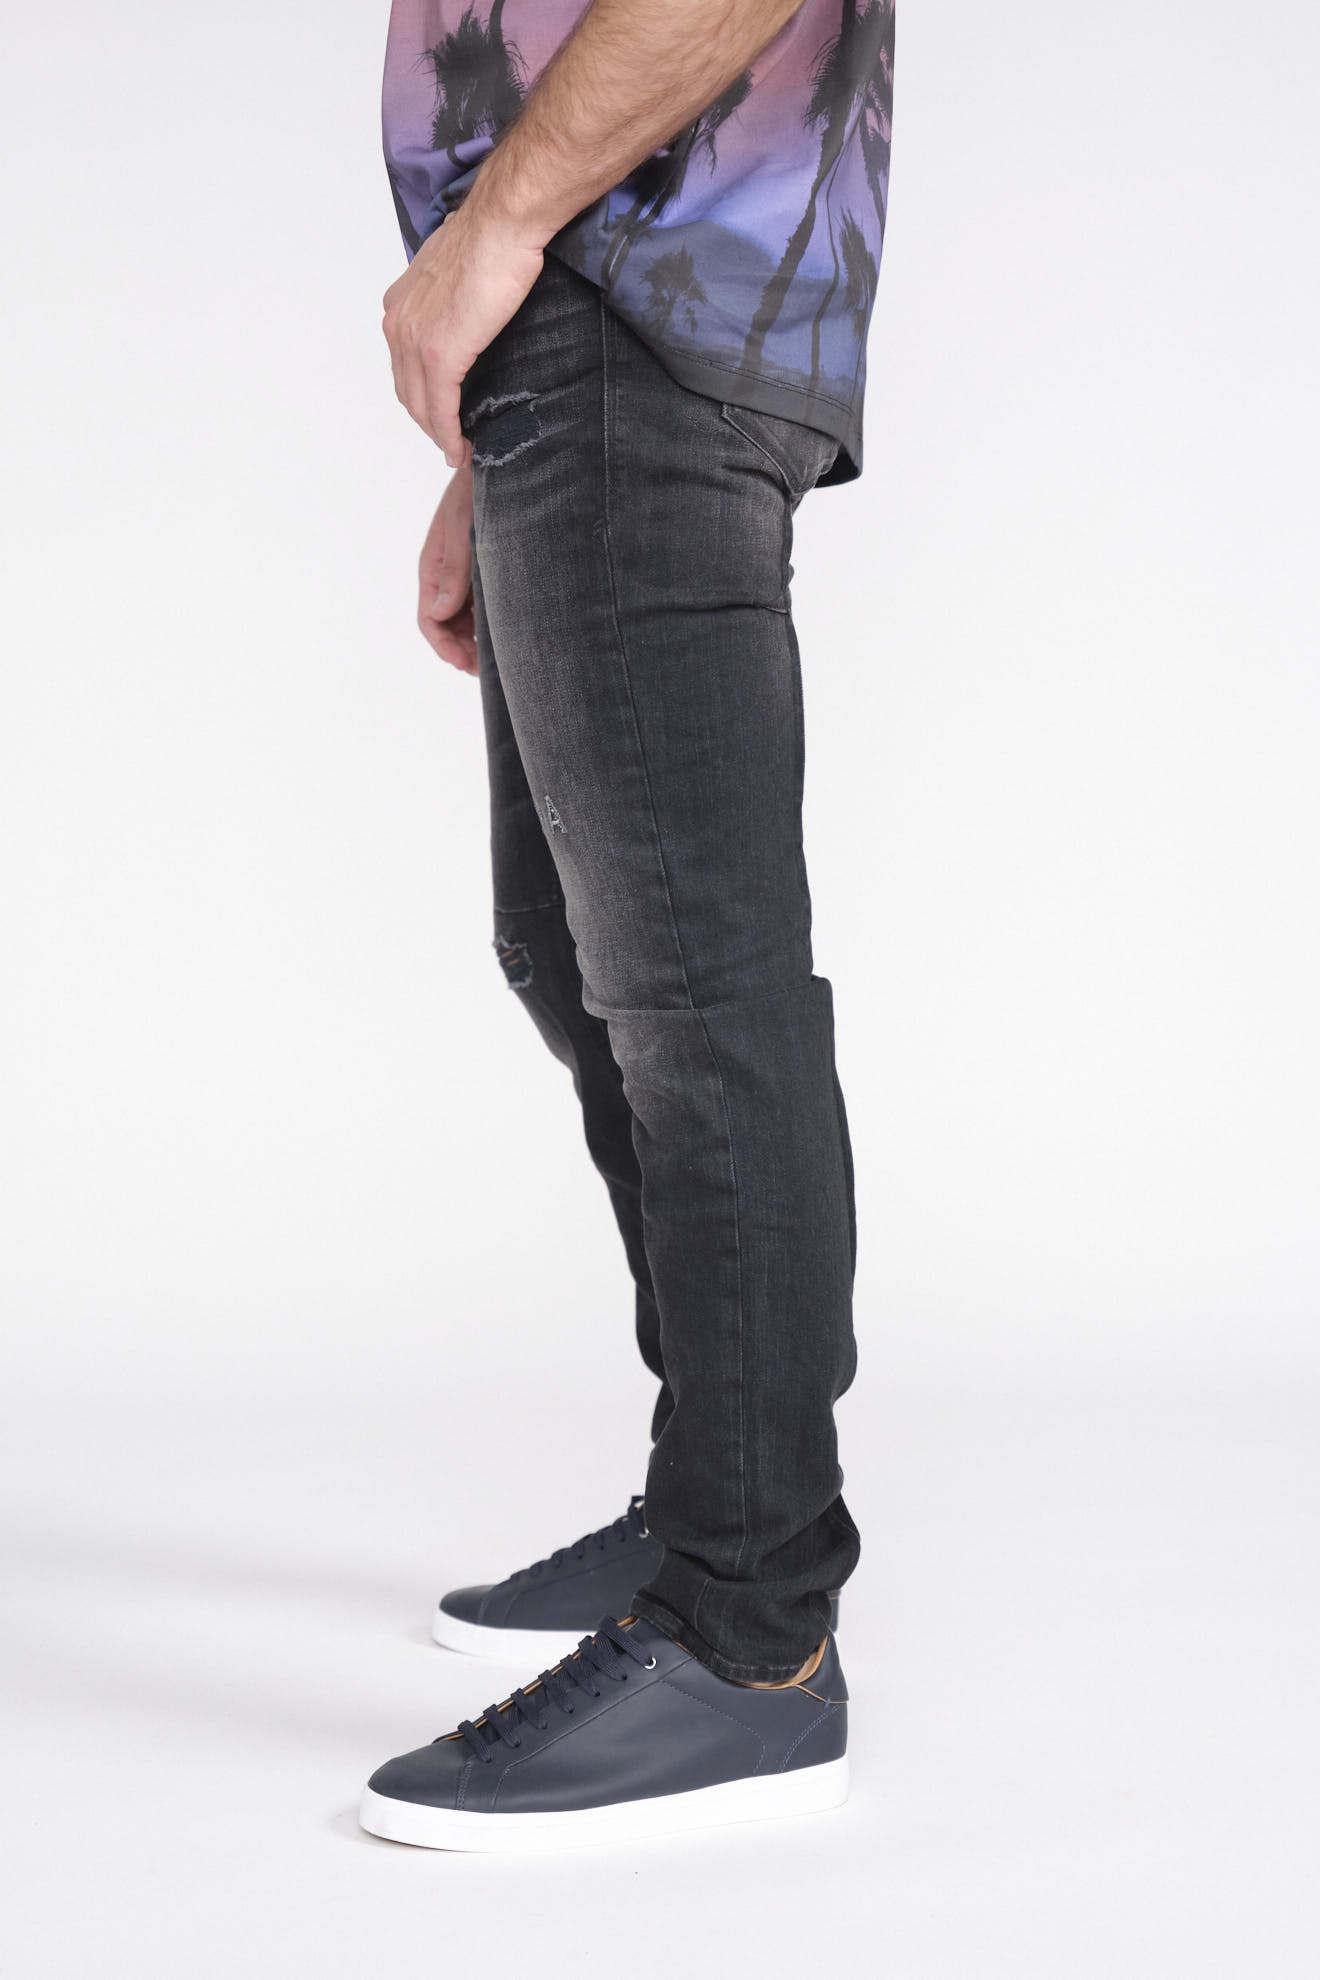 RtA Classic Pintuck - Jeans pants  grey 33